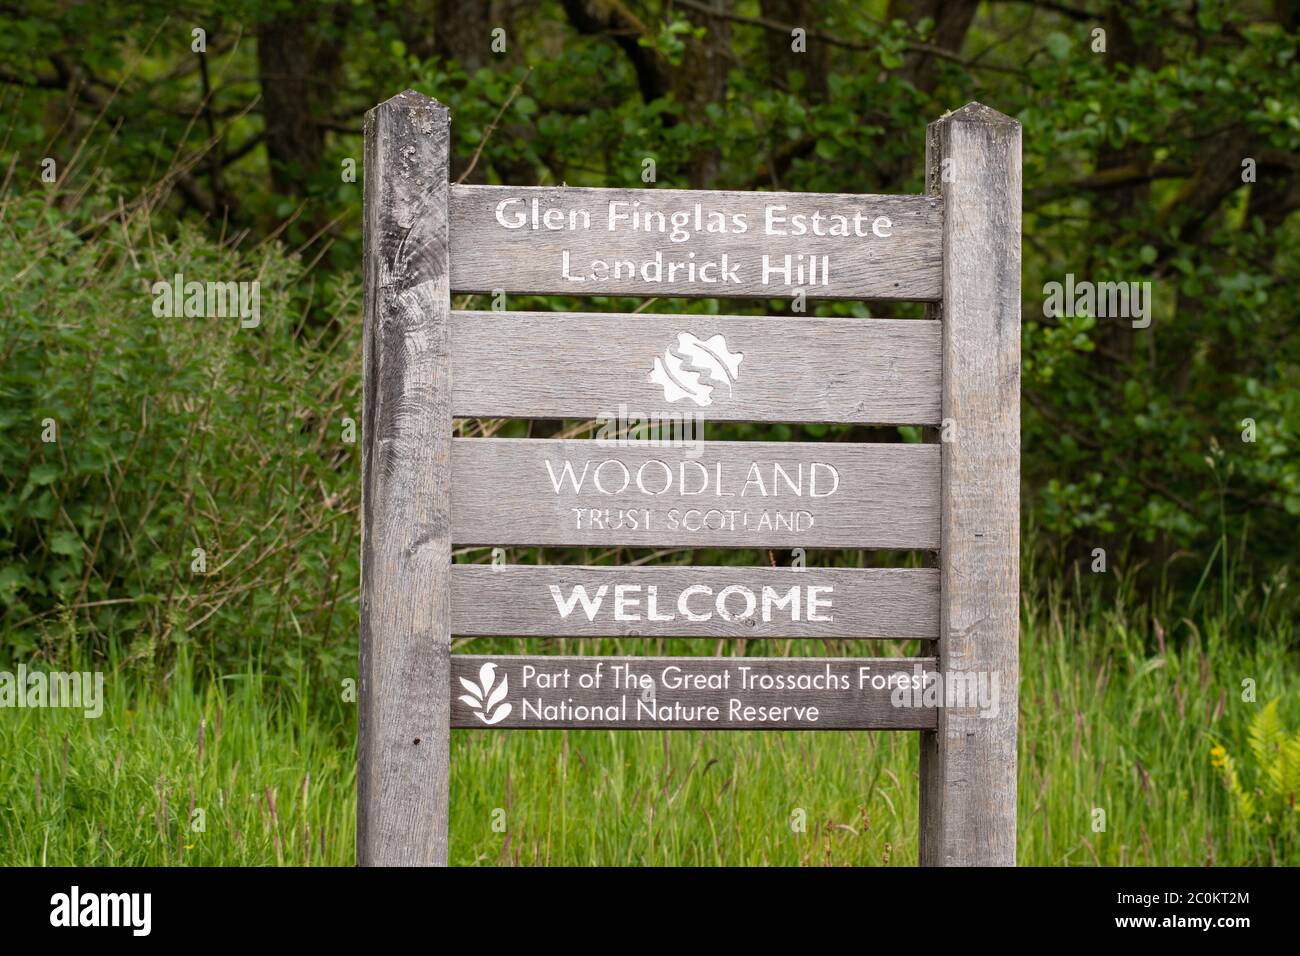 Woodland Trust Scotland sign - Lendrick Hill, Glen Finglas Estate, Part of The Great Trossachs Forest National Nature Reserve, Scotland, UK Stock Photo